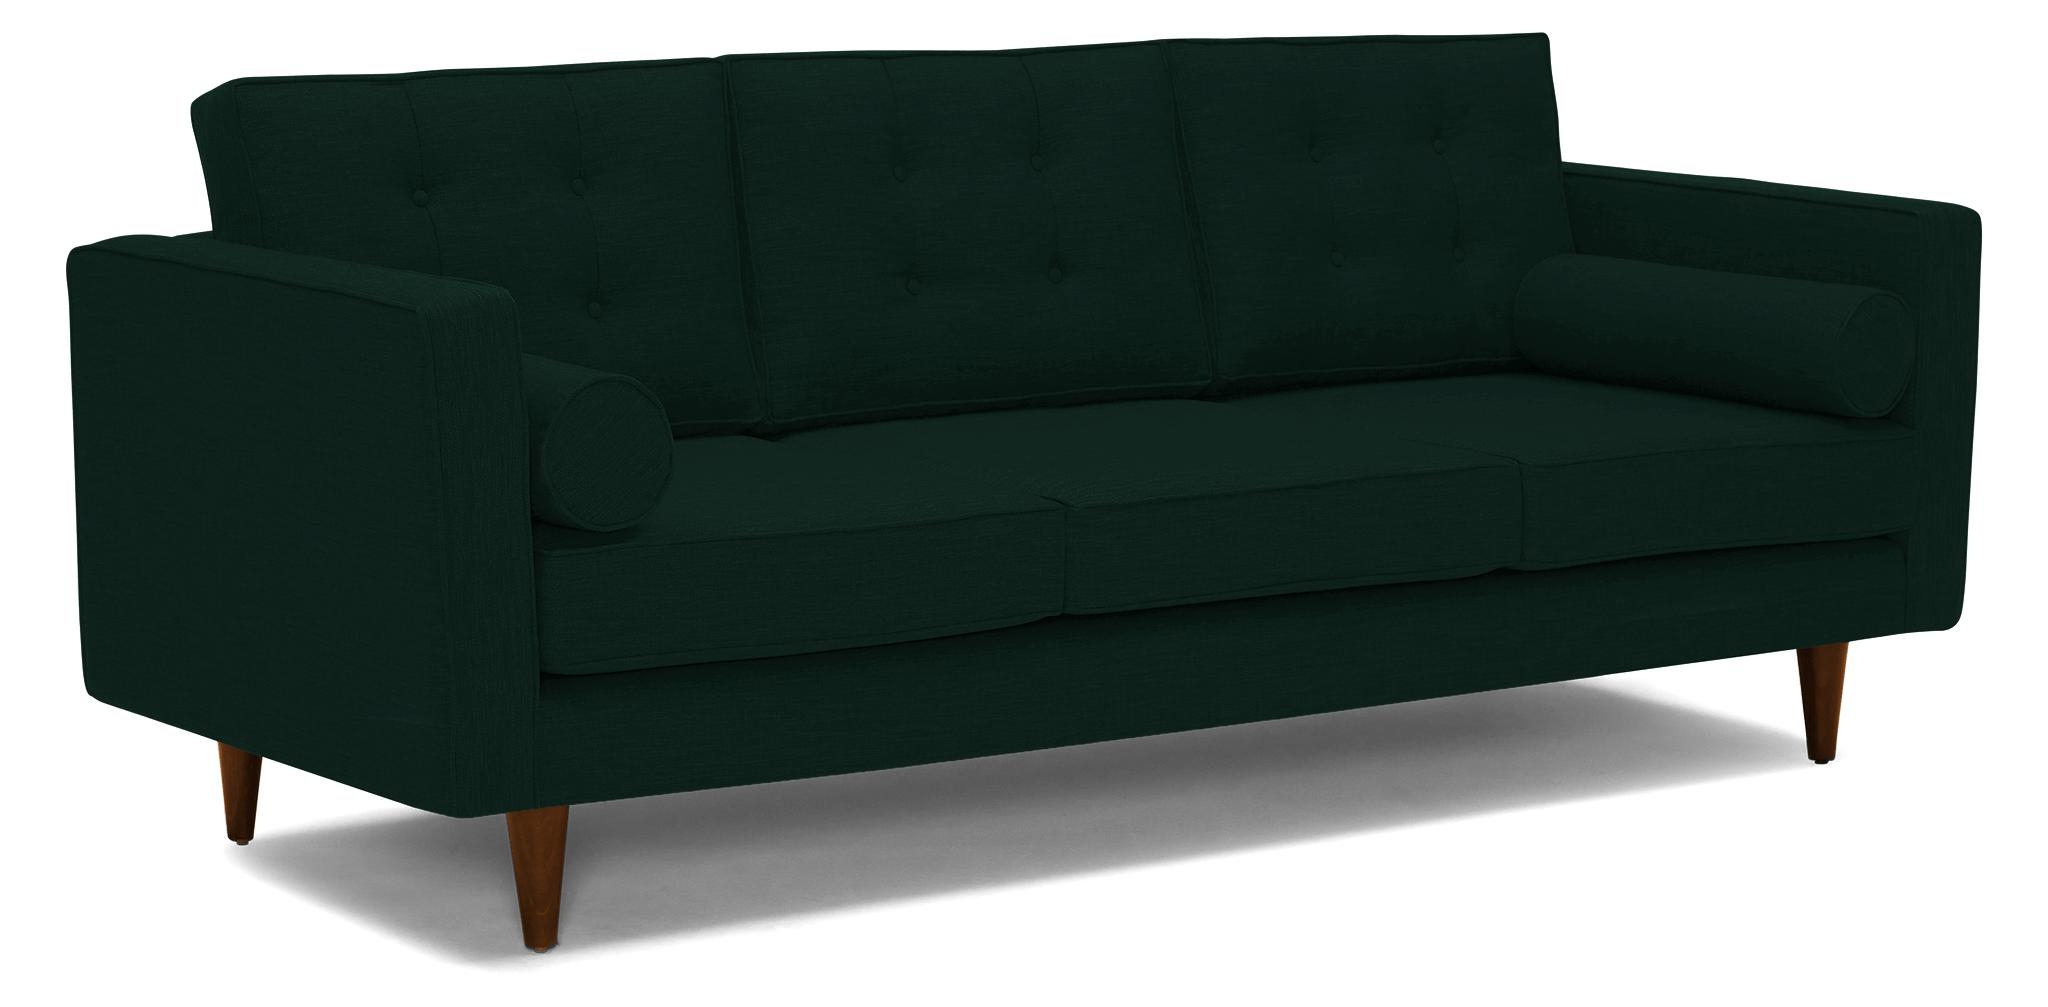 Green Braxton Mid Century Modern Sofa - Royale Evergreen - Mocha - Image 1